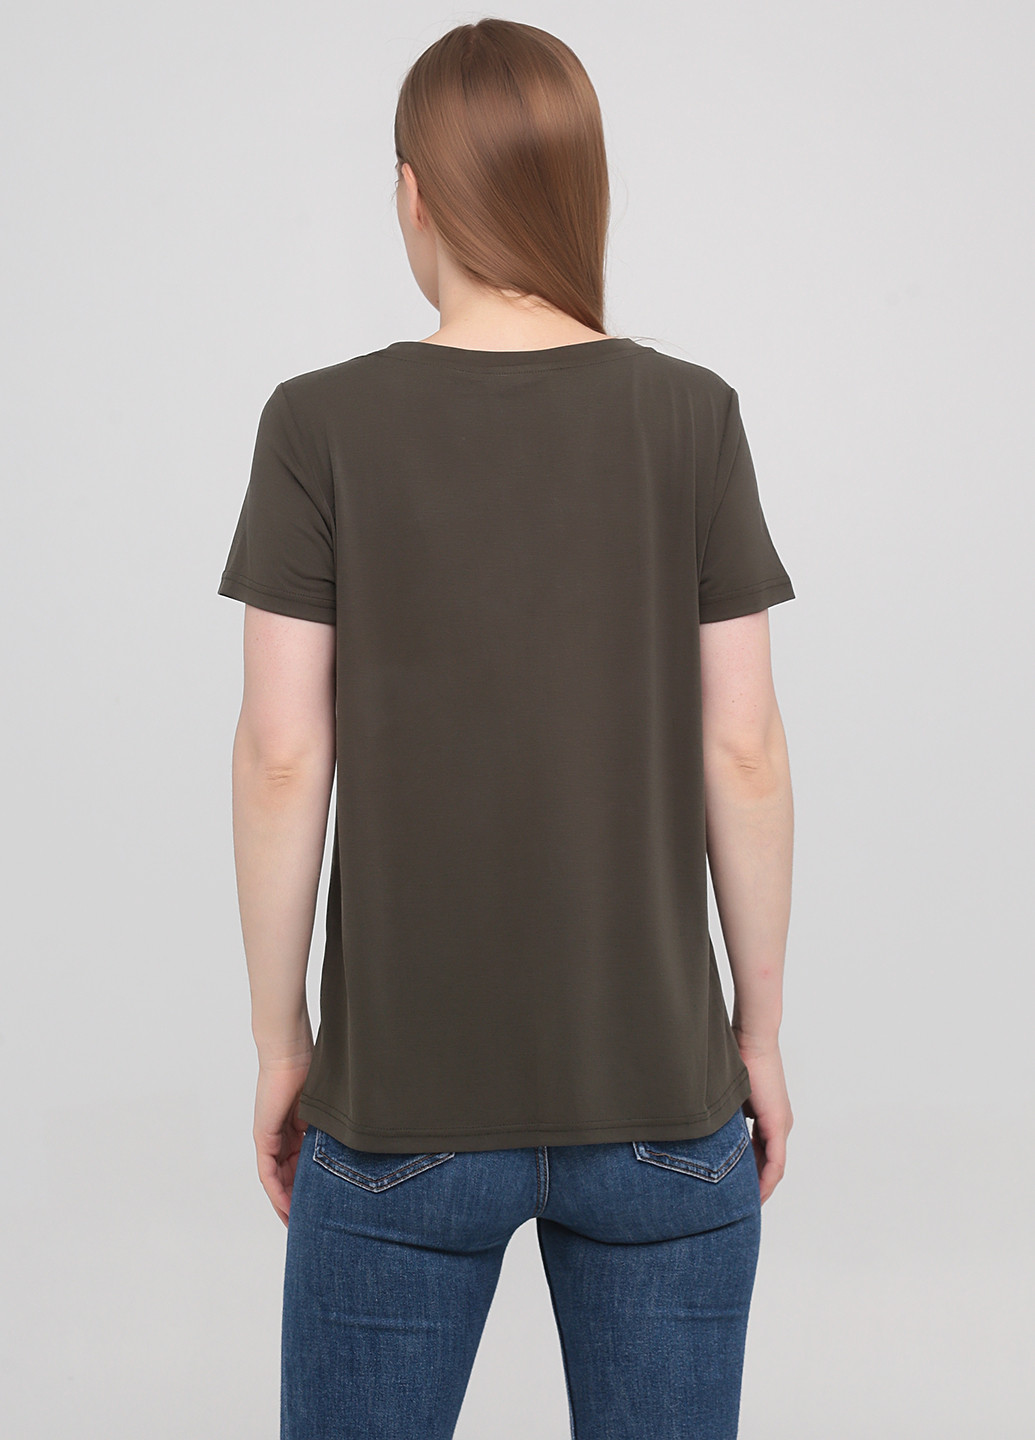 Хаки (оливковая) летняя футболка Minimum